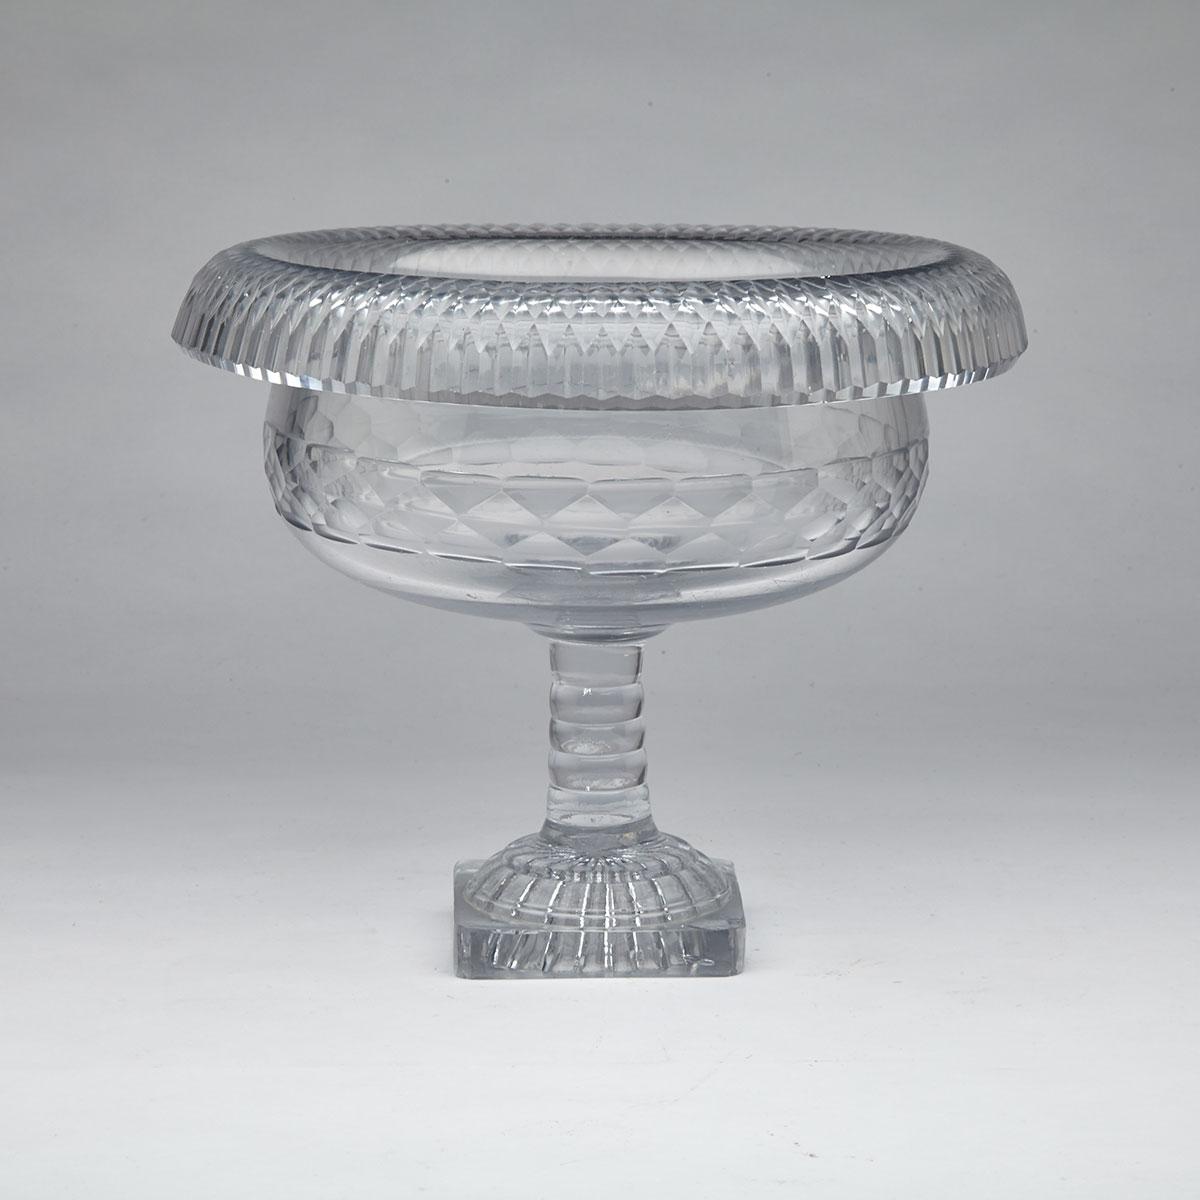 Anglo-Irish Cut Glass Pedestal Footed Circular Bowl, c.1800